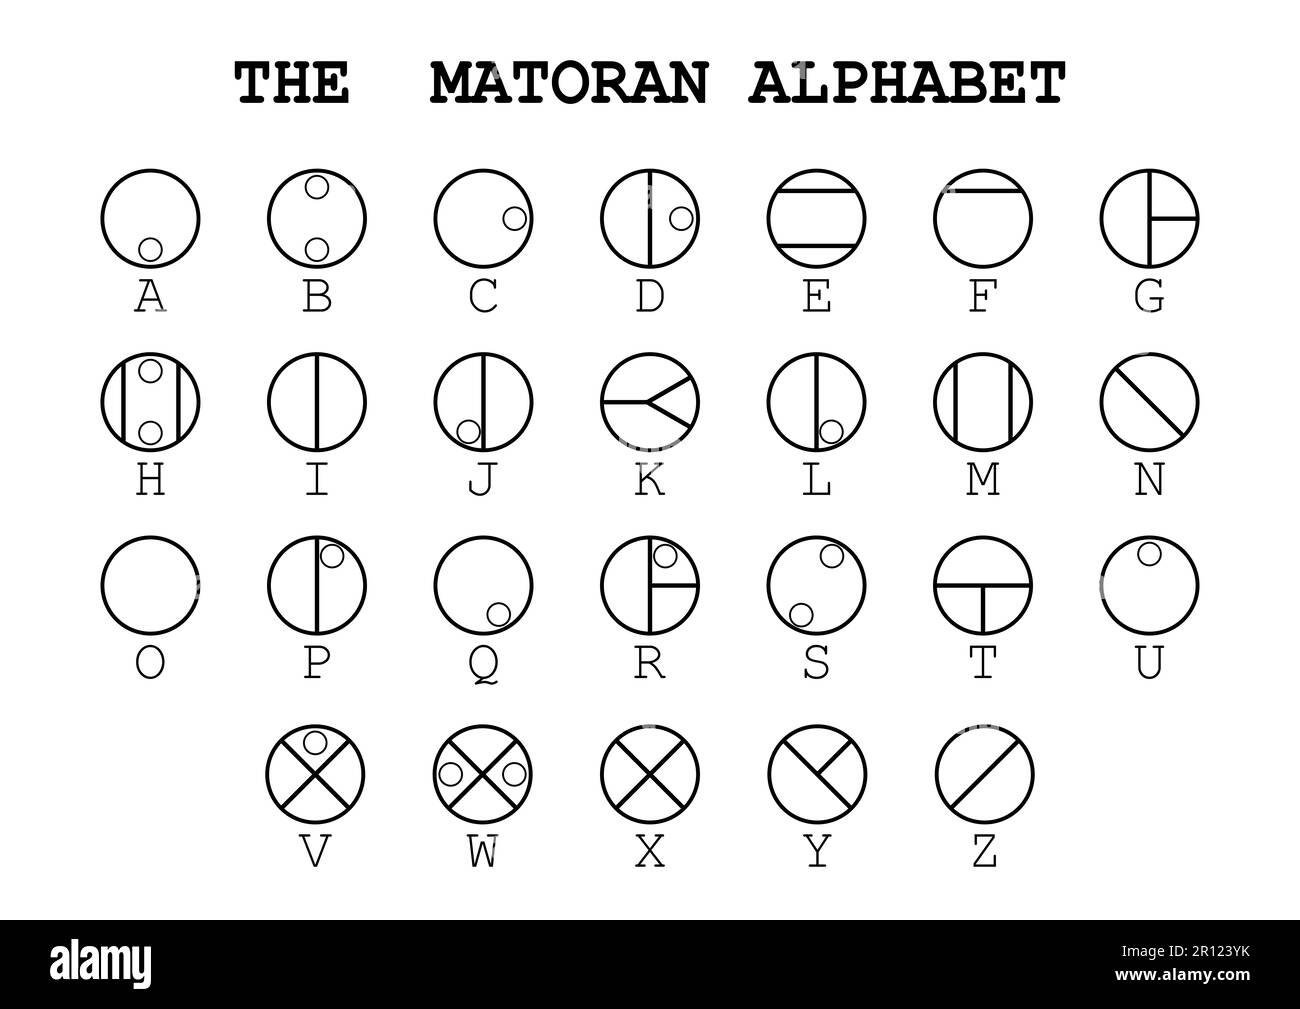 The Matoran Alphabet. Circular writing style. Stock Photo